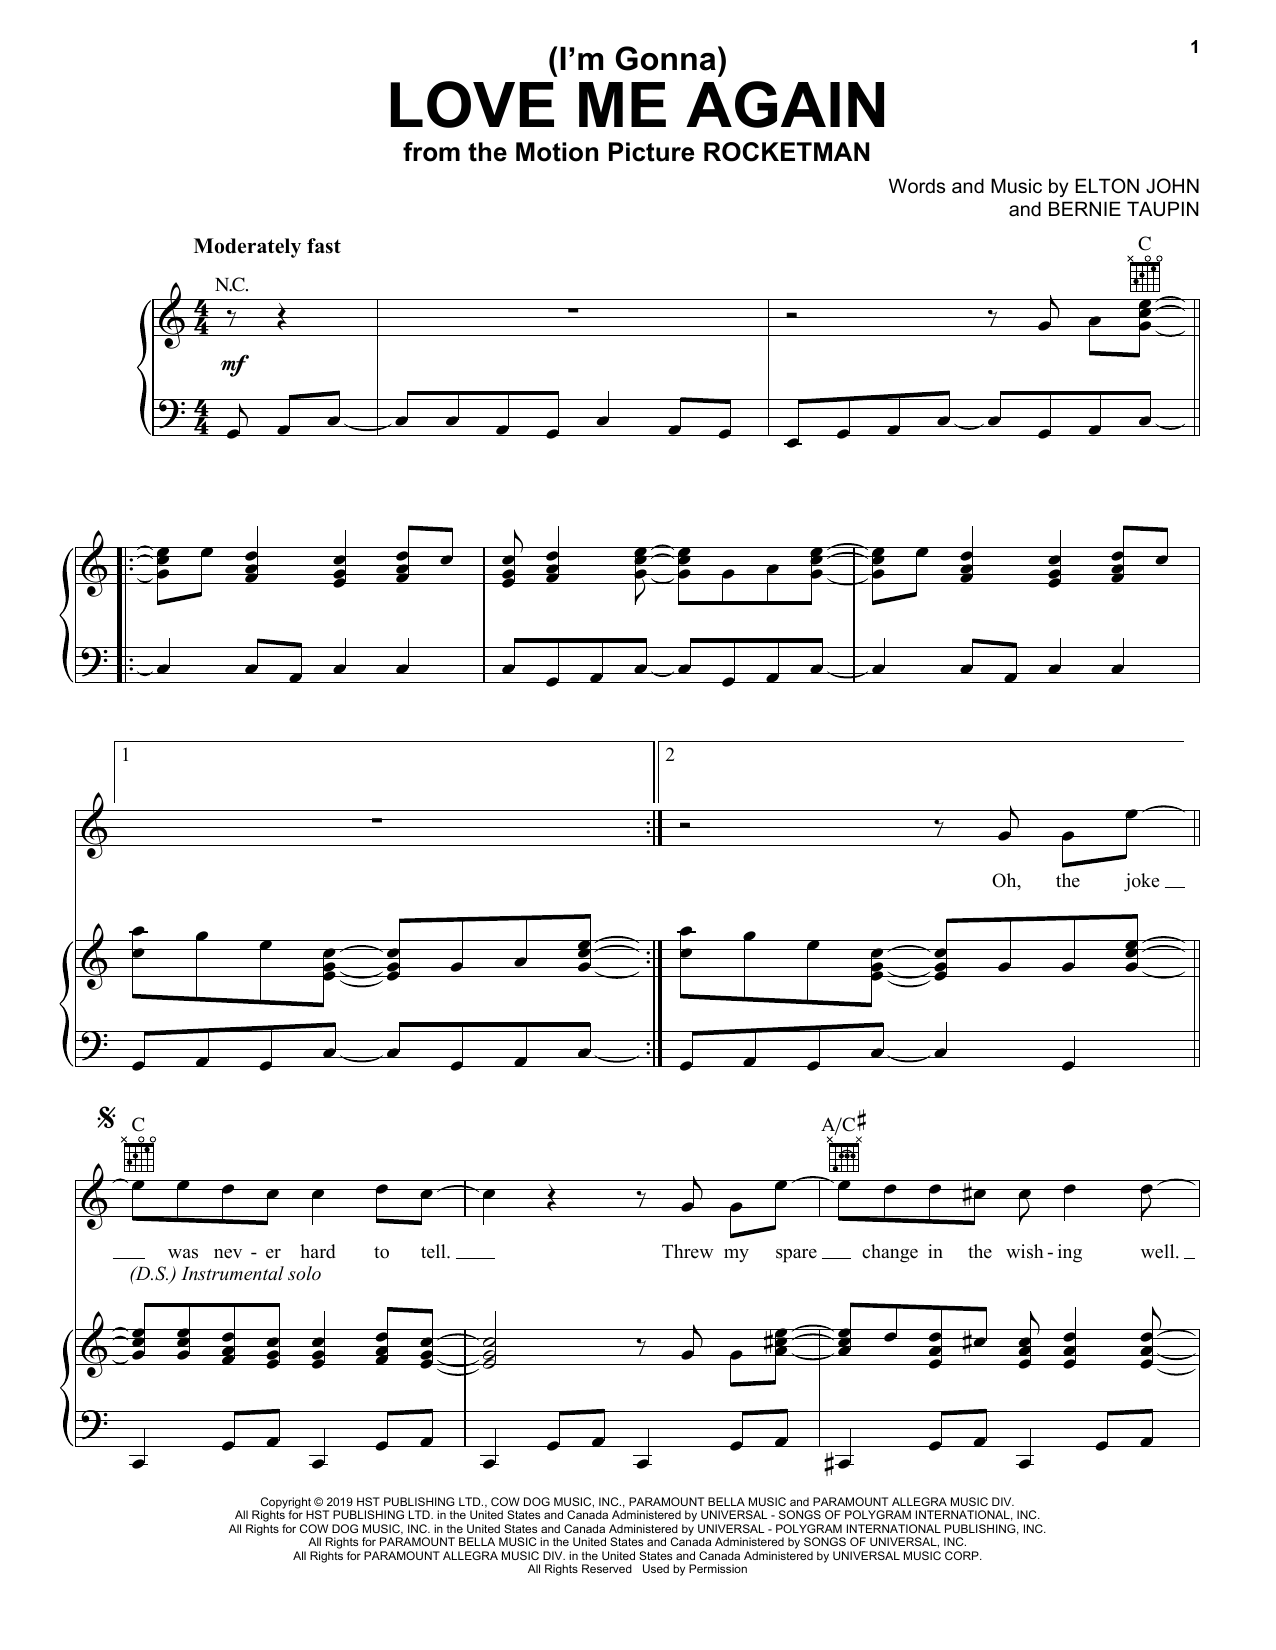 Elton John & Taron Egerton (I'm Gonna) Love Me Again (from Rocketman) Sheet Music Notes & Chords for Guitar Chords/Lyrics - Download or Print PDF